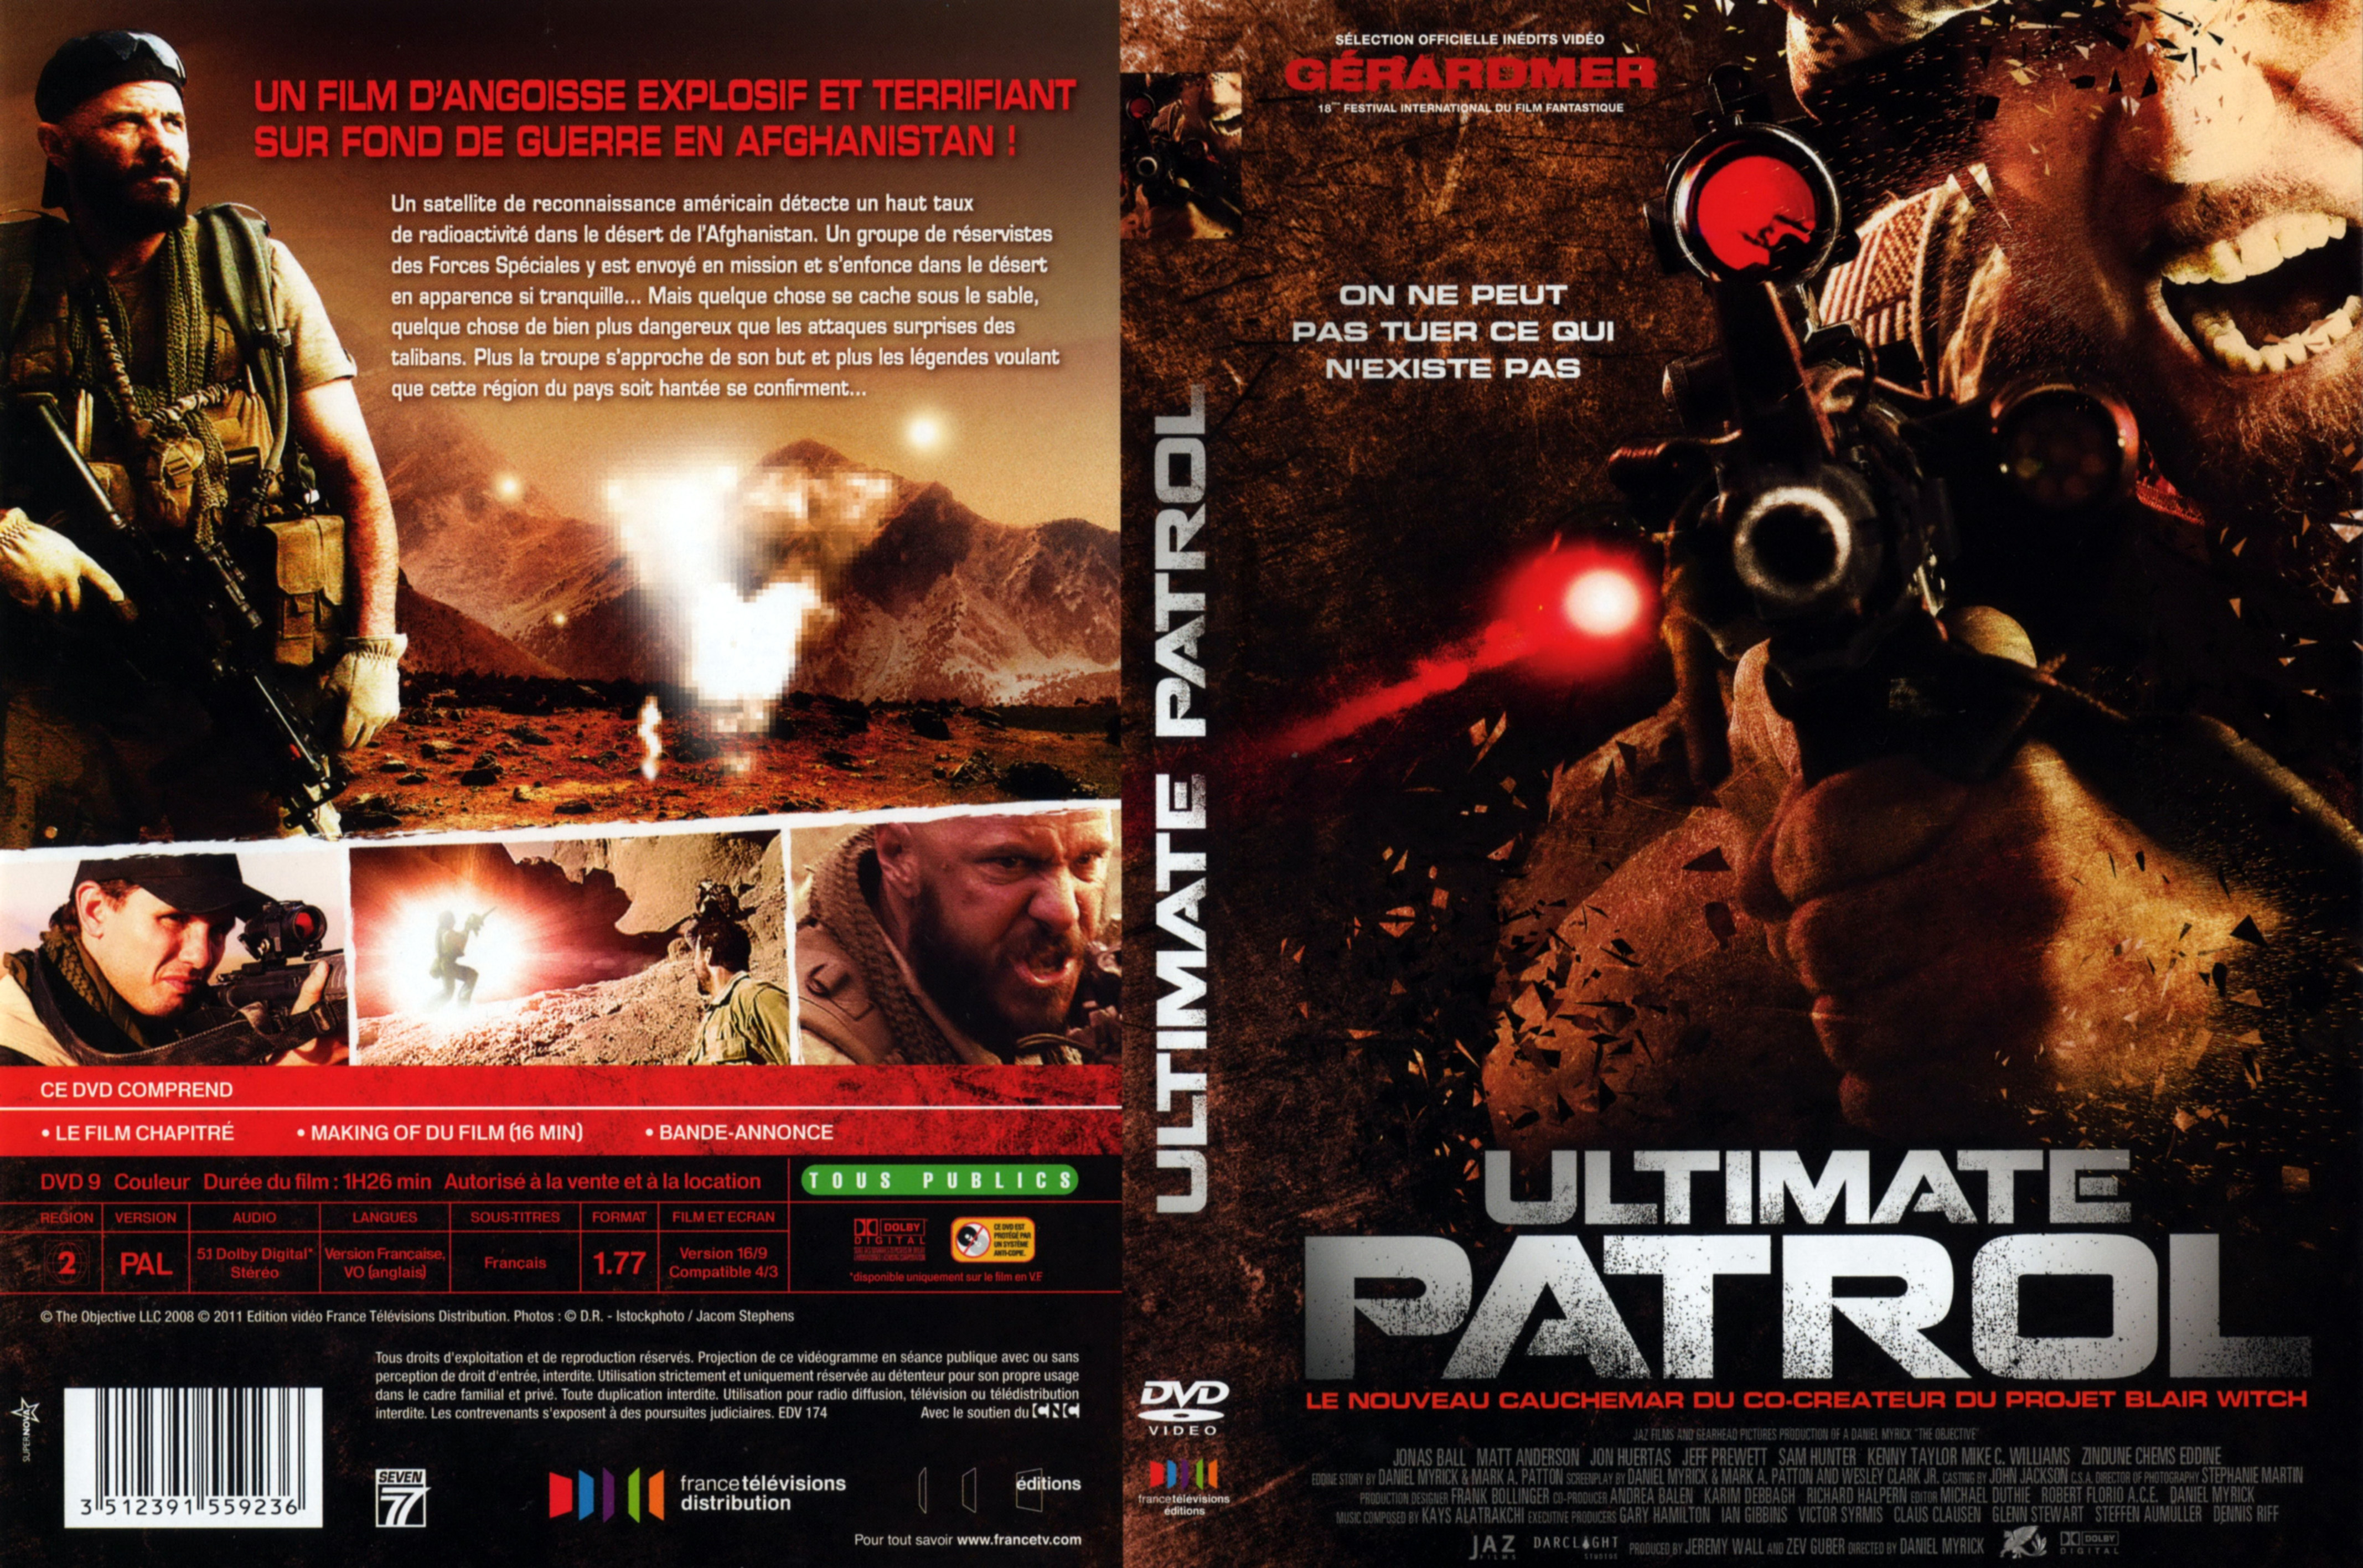 Jaquette DVD Ultimate patrol